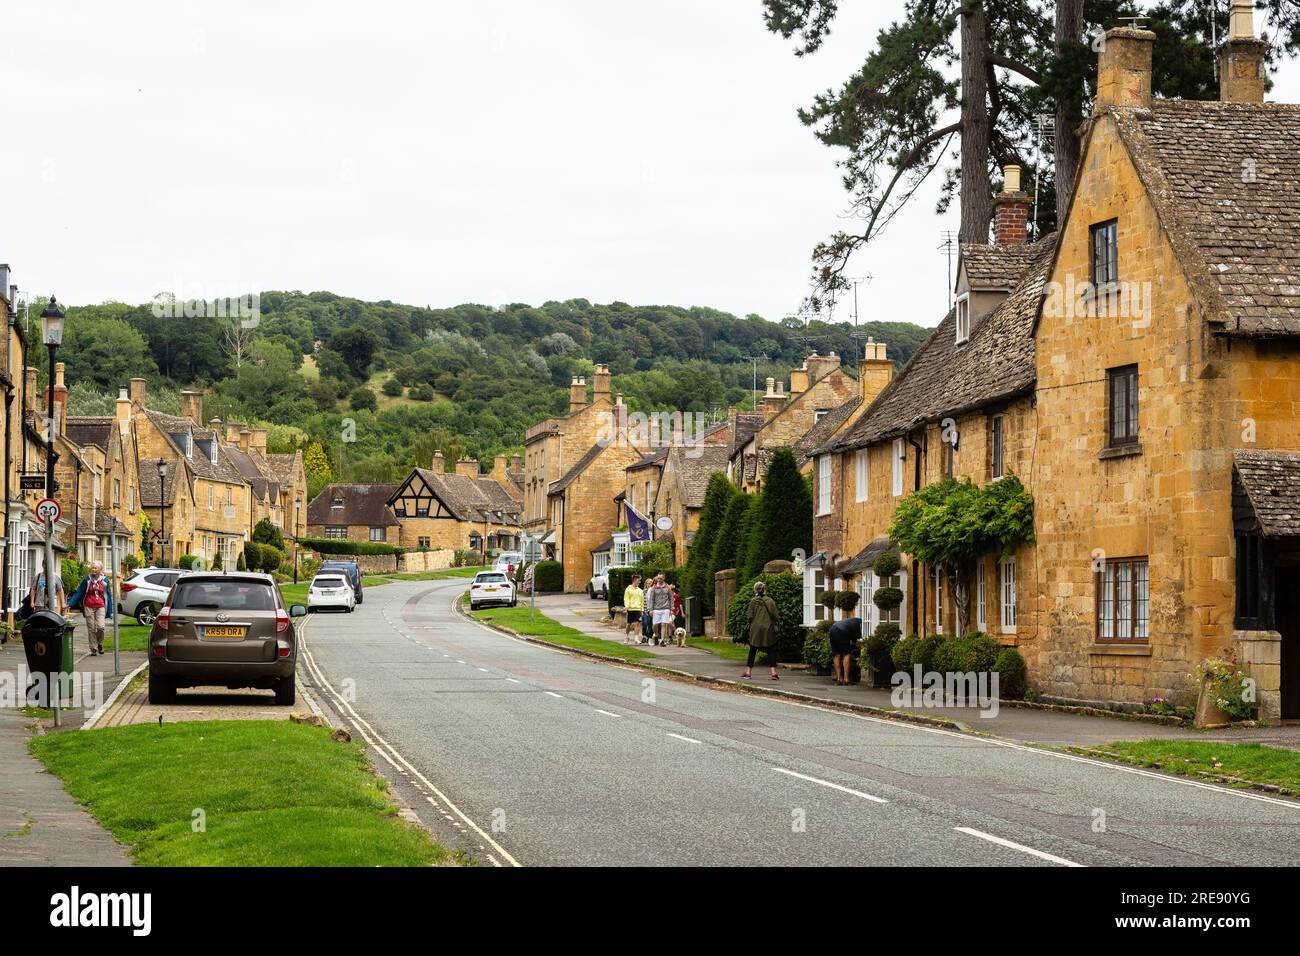 Das Dorf Broadway, Worcestershire, England, im Cotwolds-Gebiet von Oustanding Natural Beauty. Stockfoto